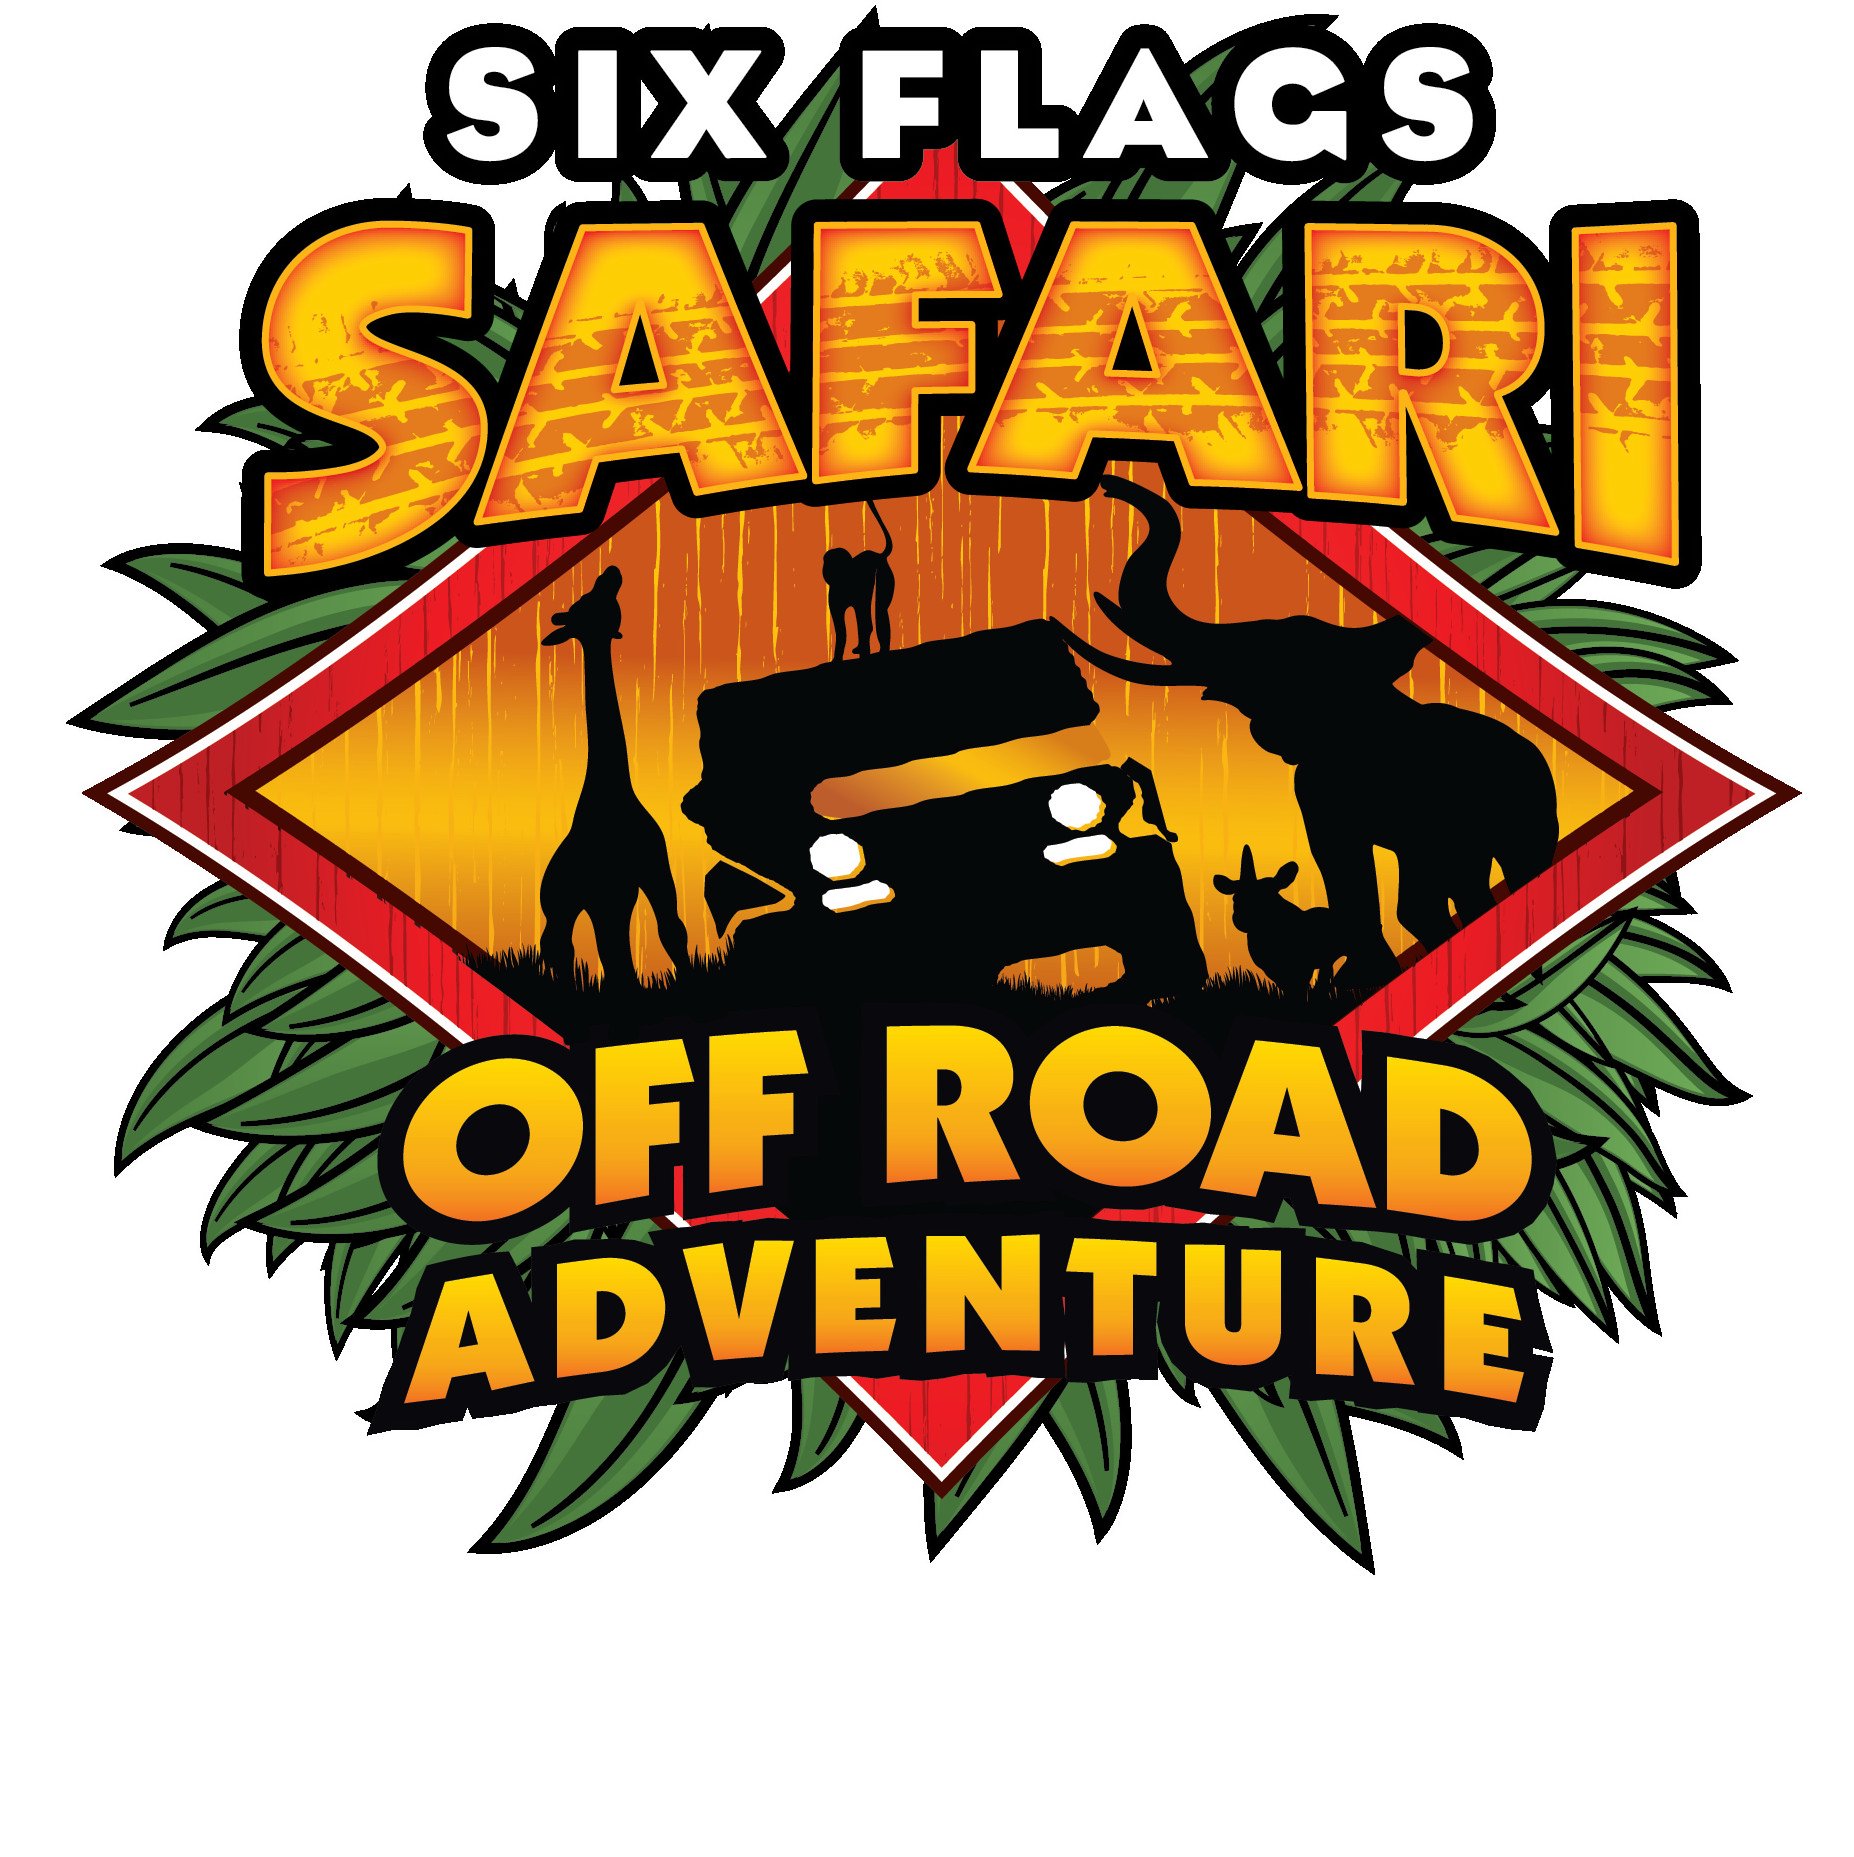  SIX FLAGS SAFARI OFF ROAD ADVENTURE